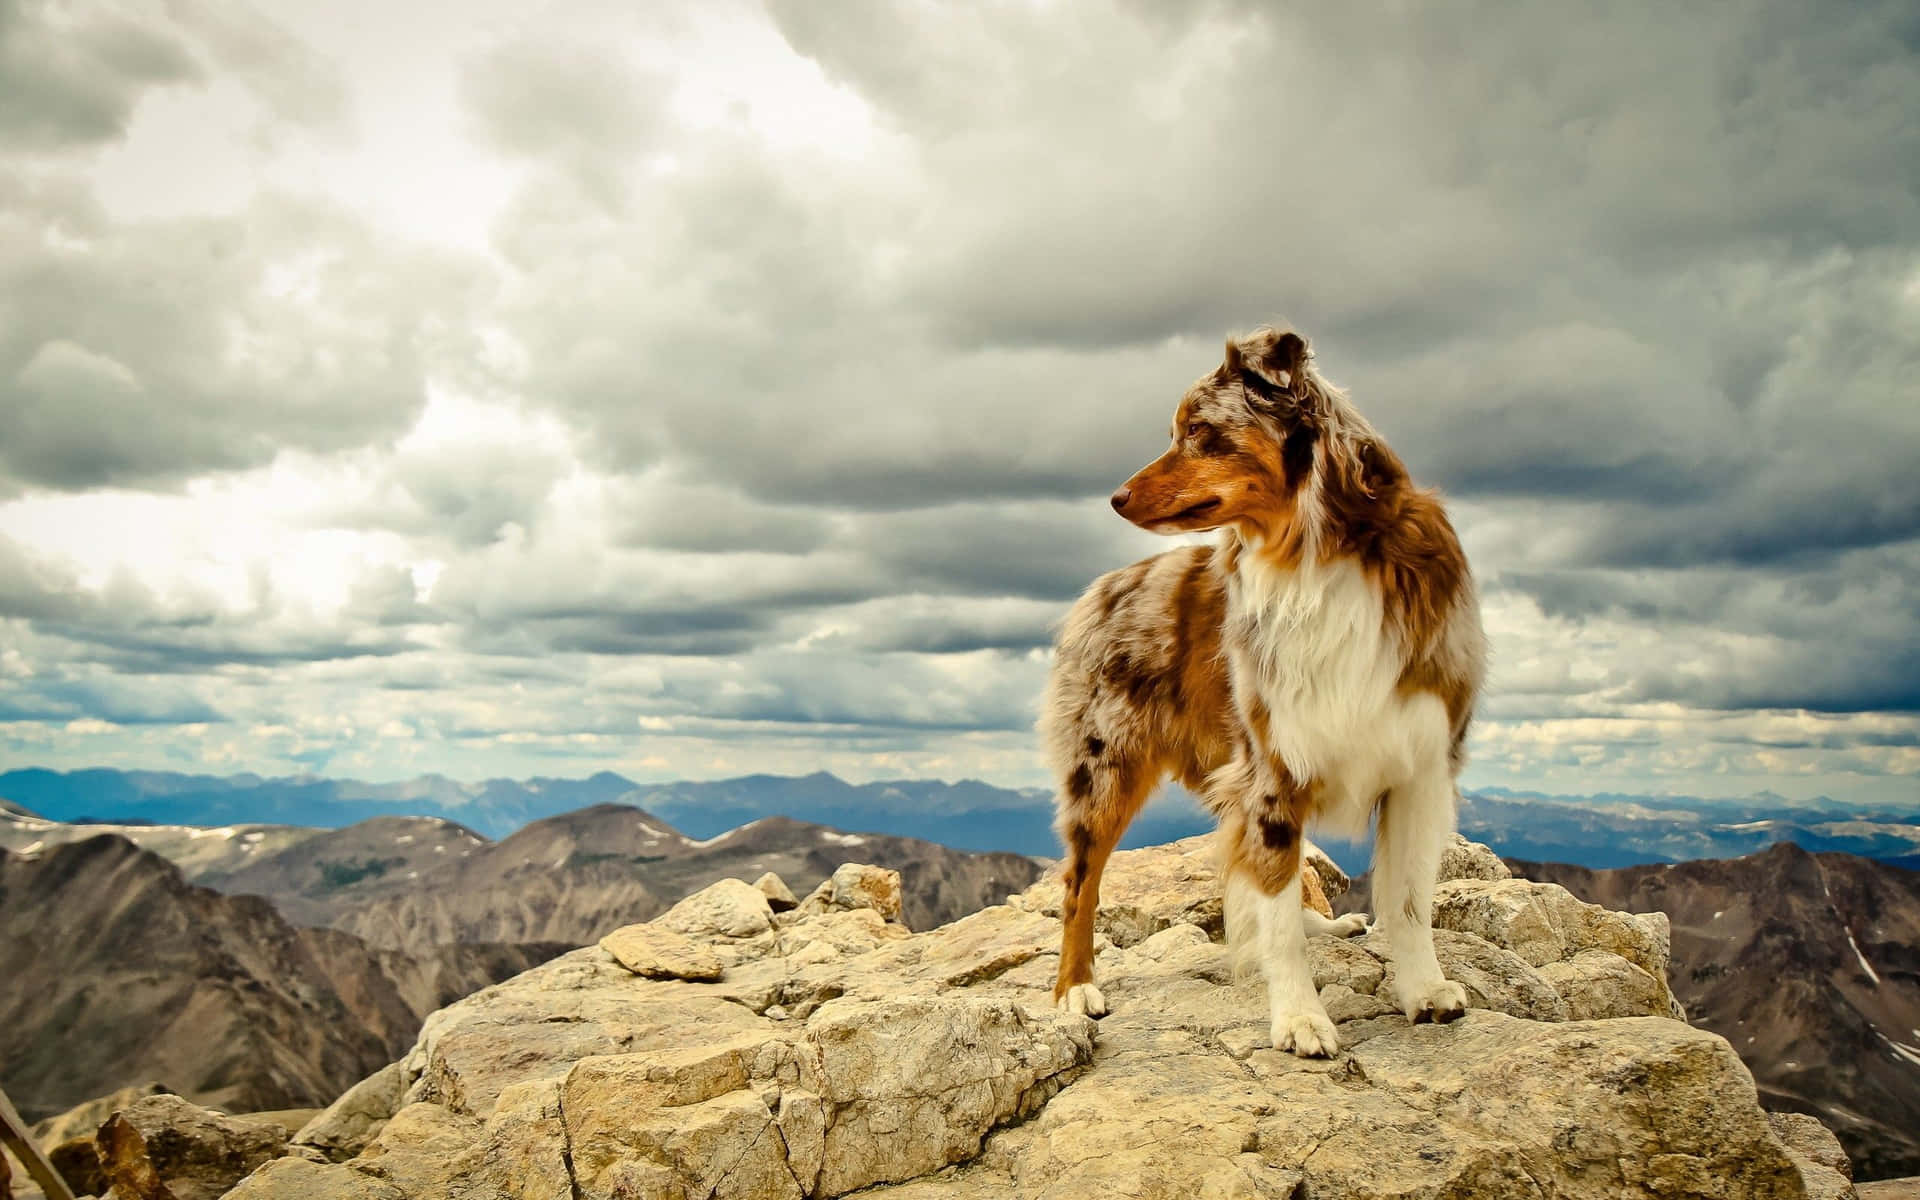 Imagende Un Australian Shepherd Dog Aventurándose En La Montaña